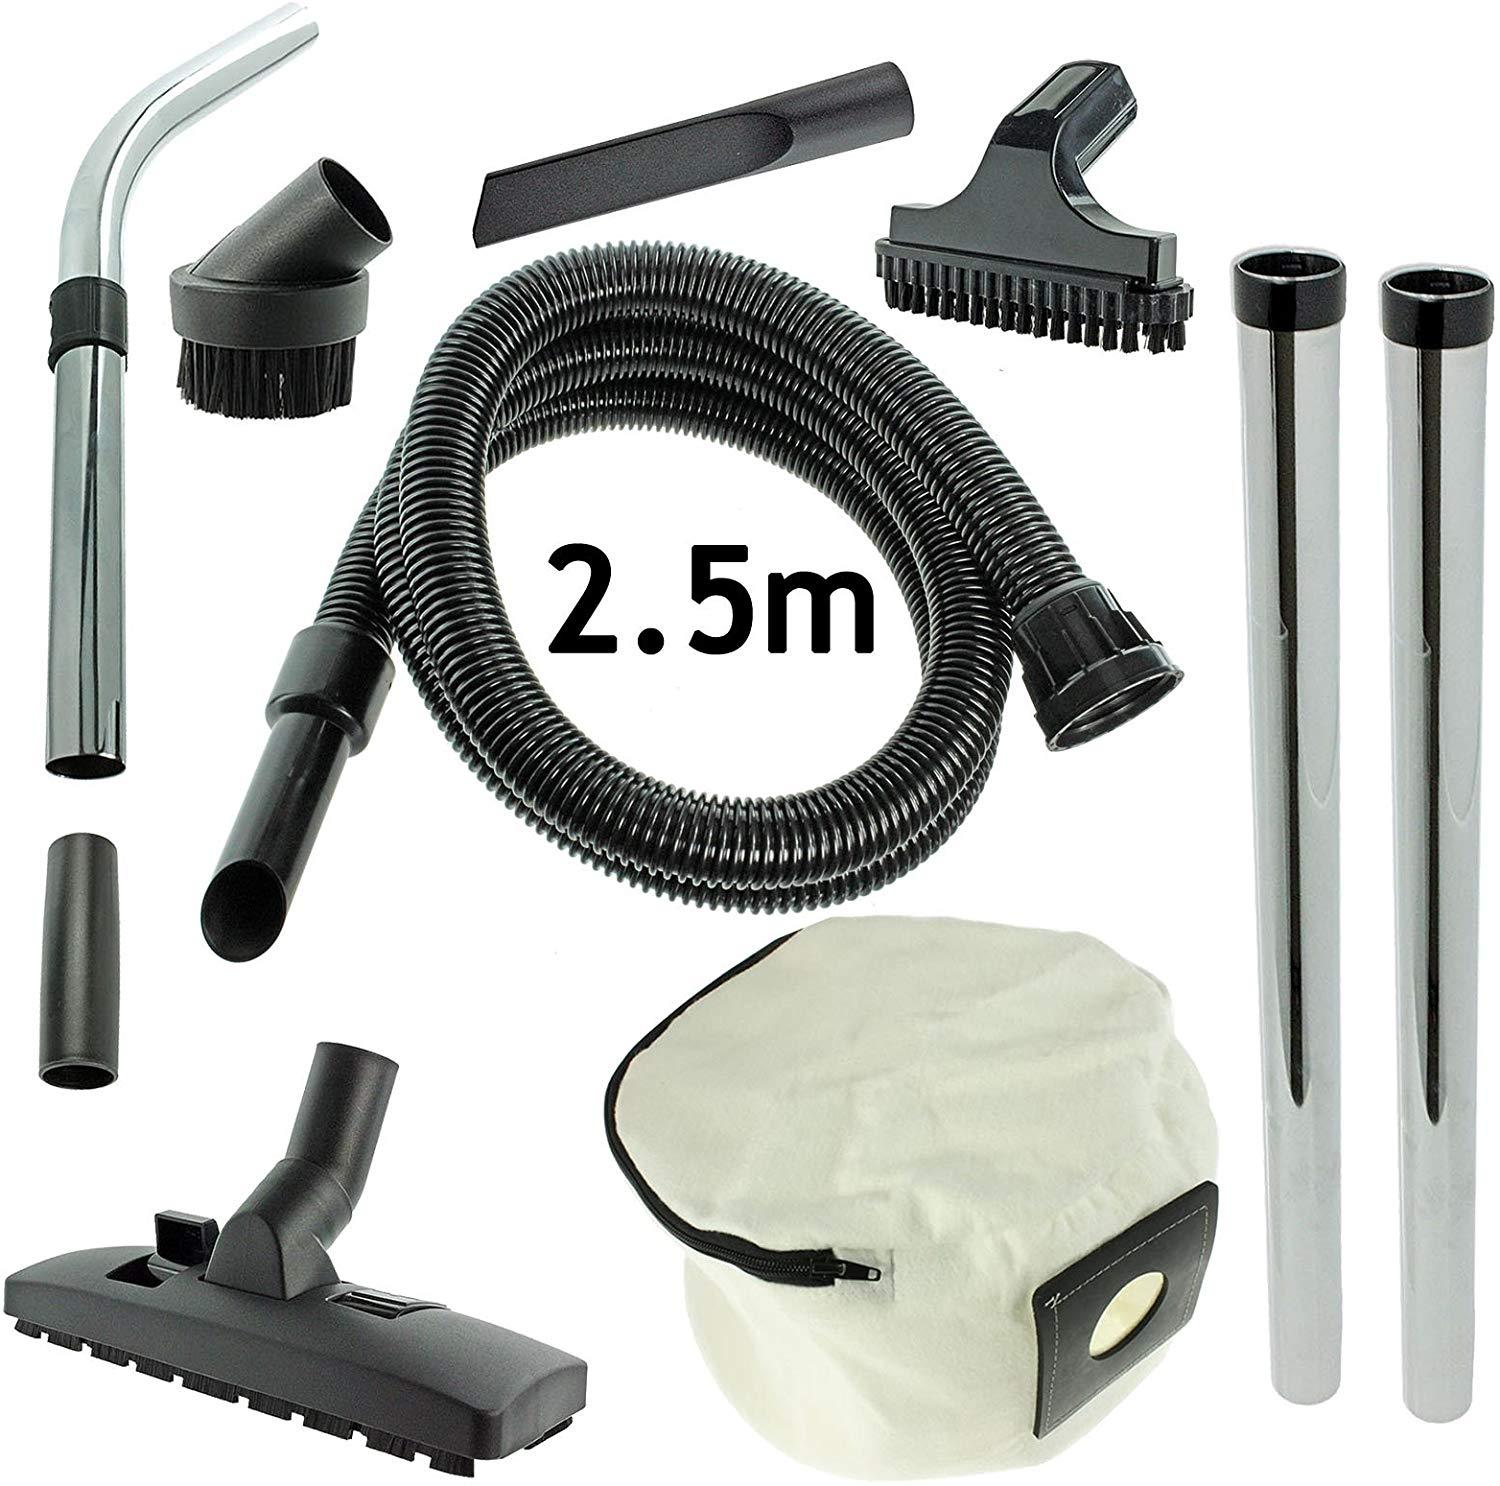 SPARES2GO Hose & Tool Kit Plus Zip Up Bag For Numatic Henry HVR200 HVR200T HVC200 Vacuum Cleaner (2.5m)